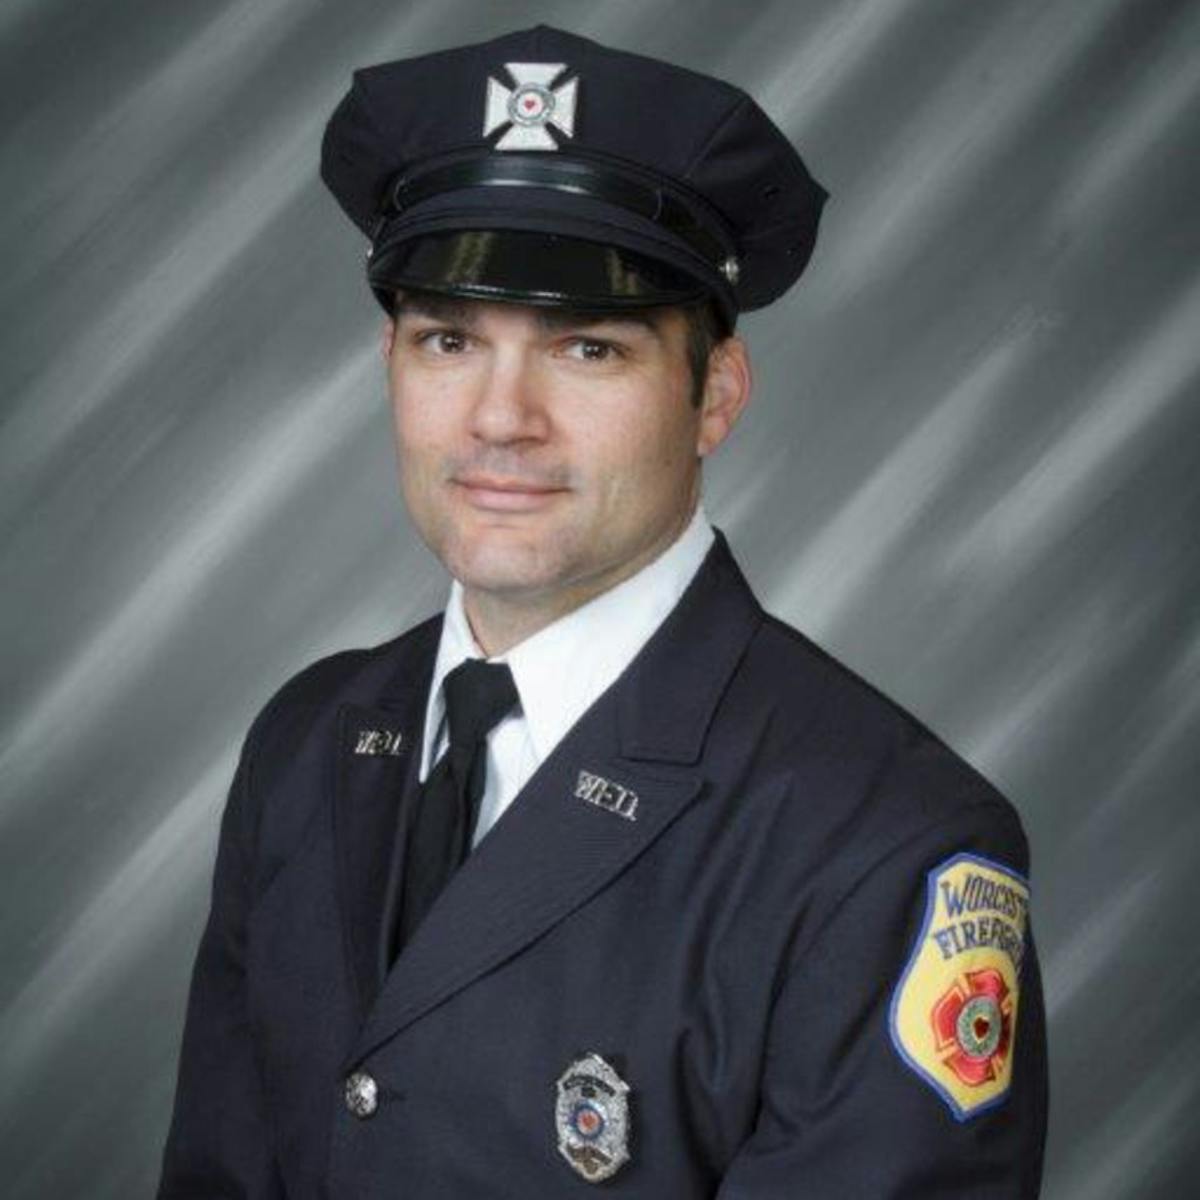 Worcester Fire Lt. Jason Menard, who died in the line of duty in November 2019.